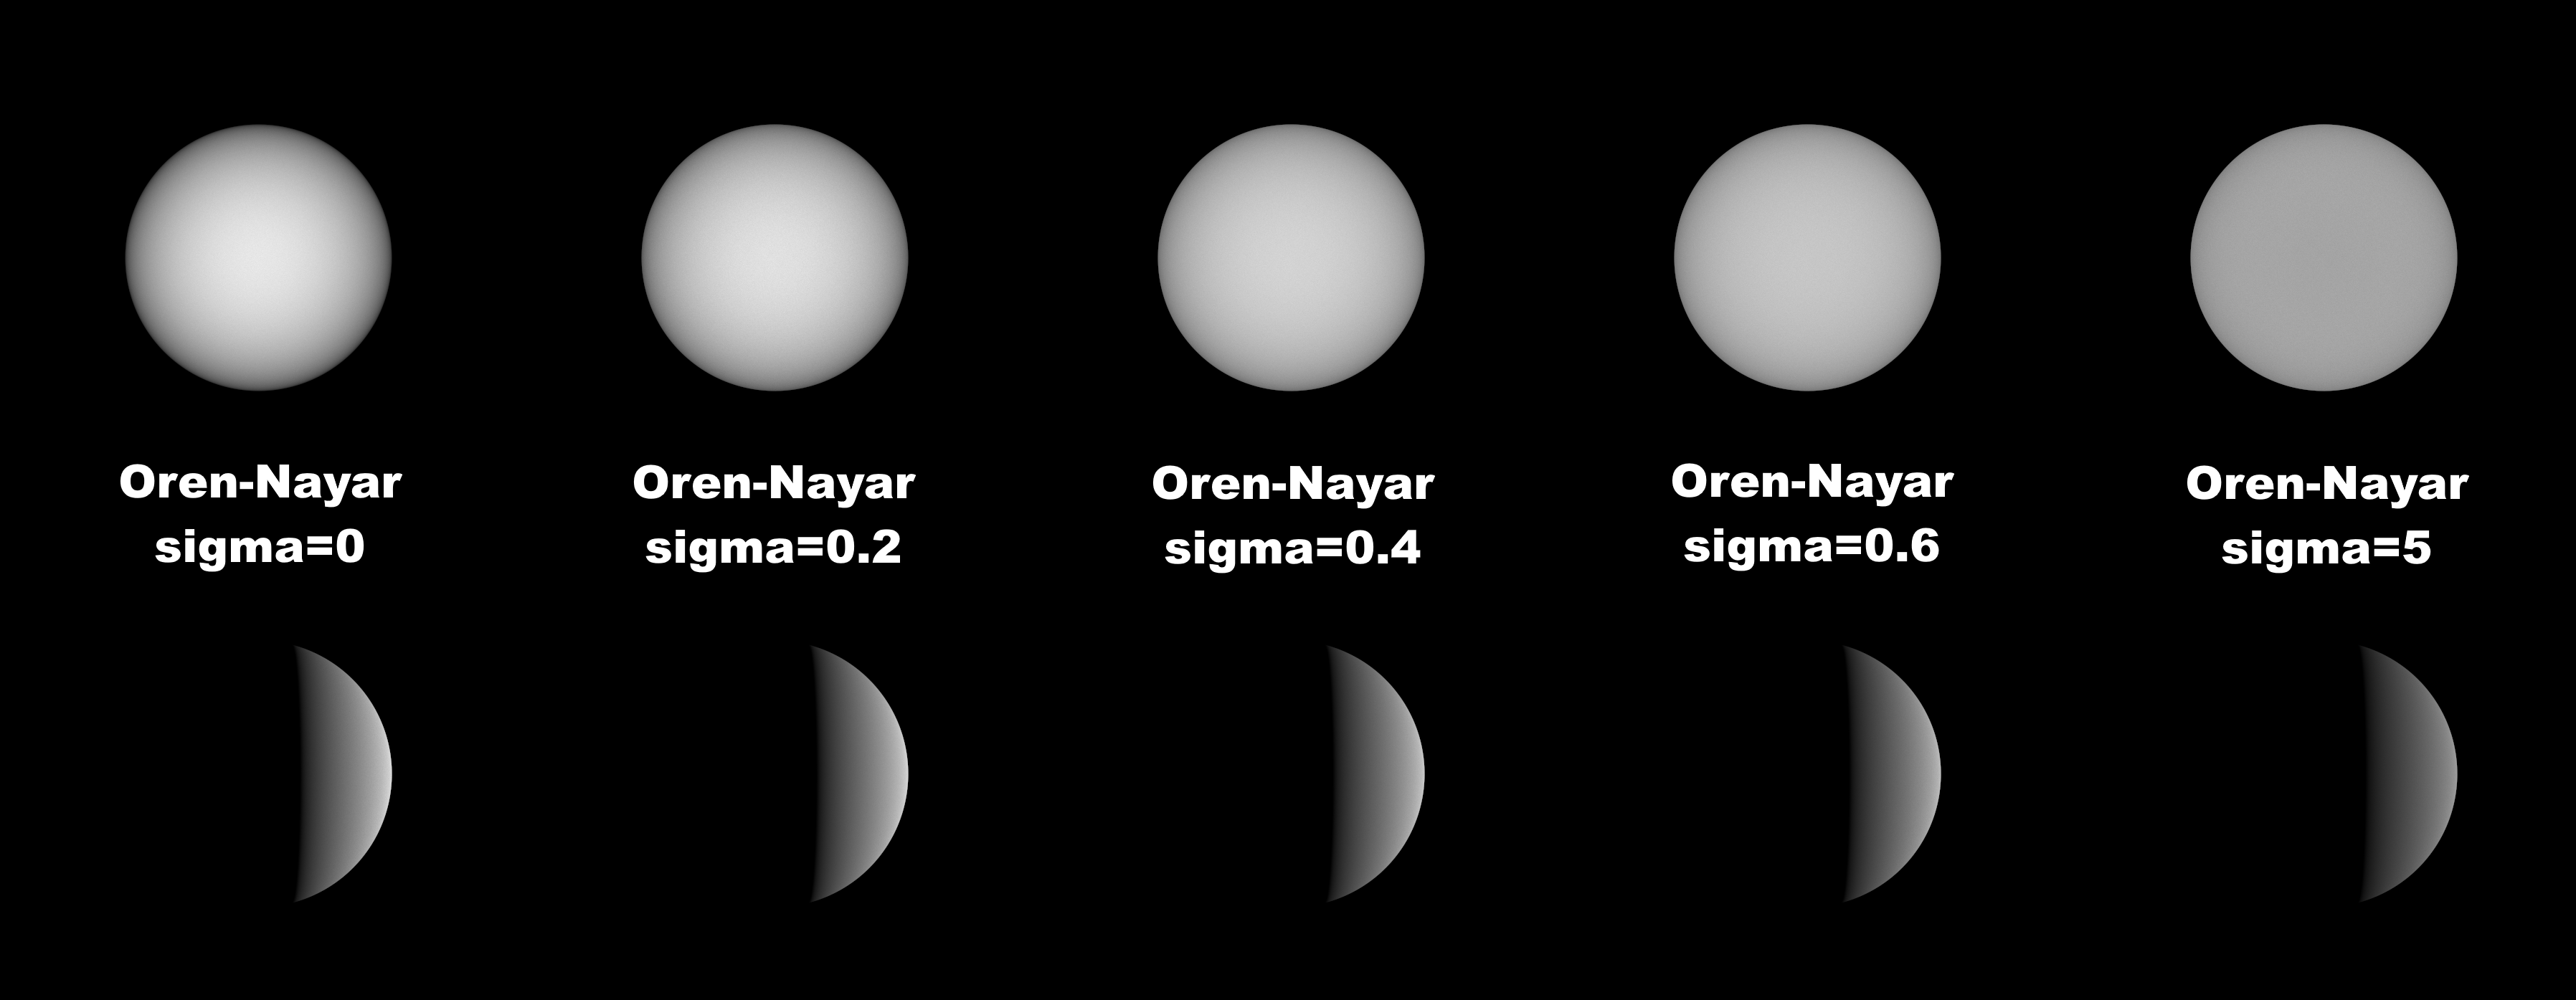 Comparison between Oren-Nayar roughness values